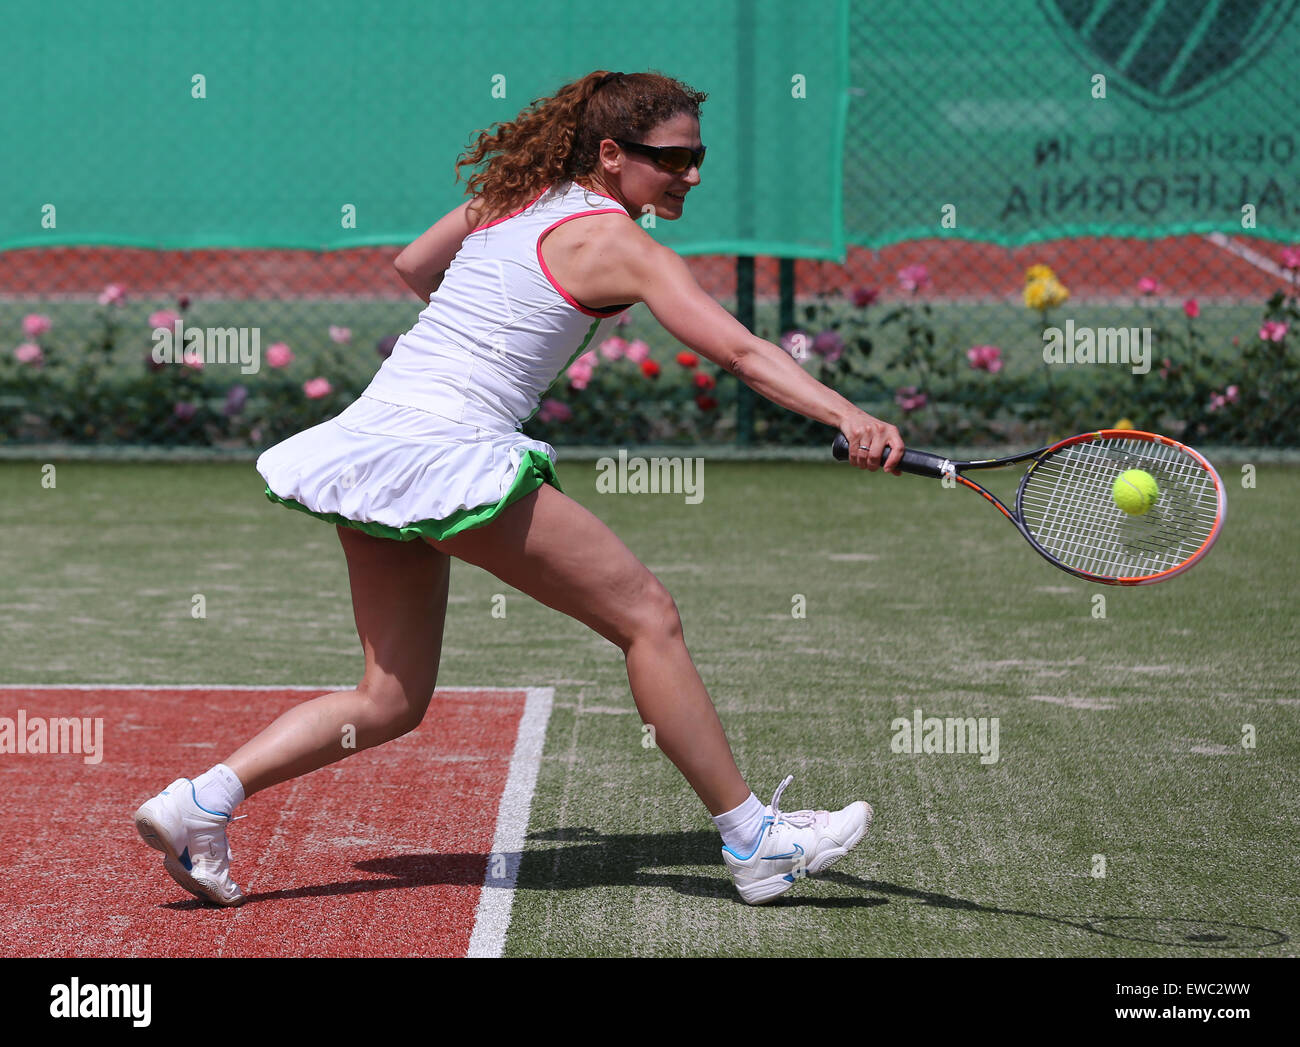 Giovane donna giocando a tennis. Foto Stock